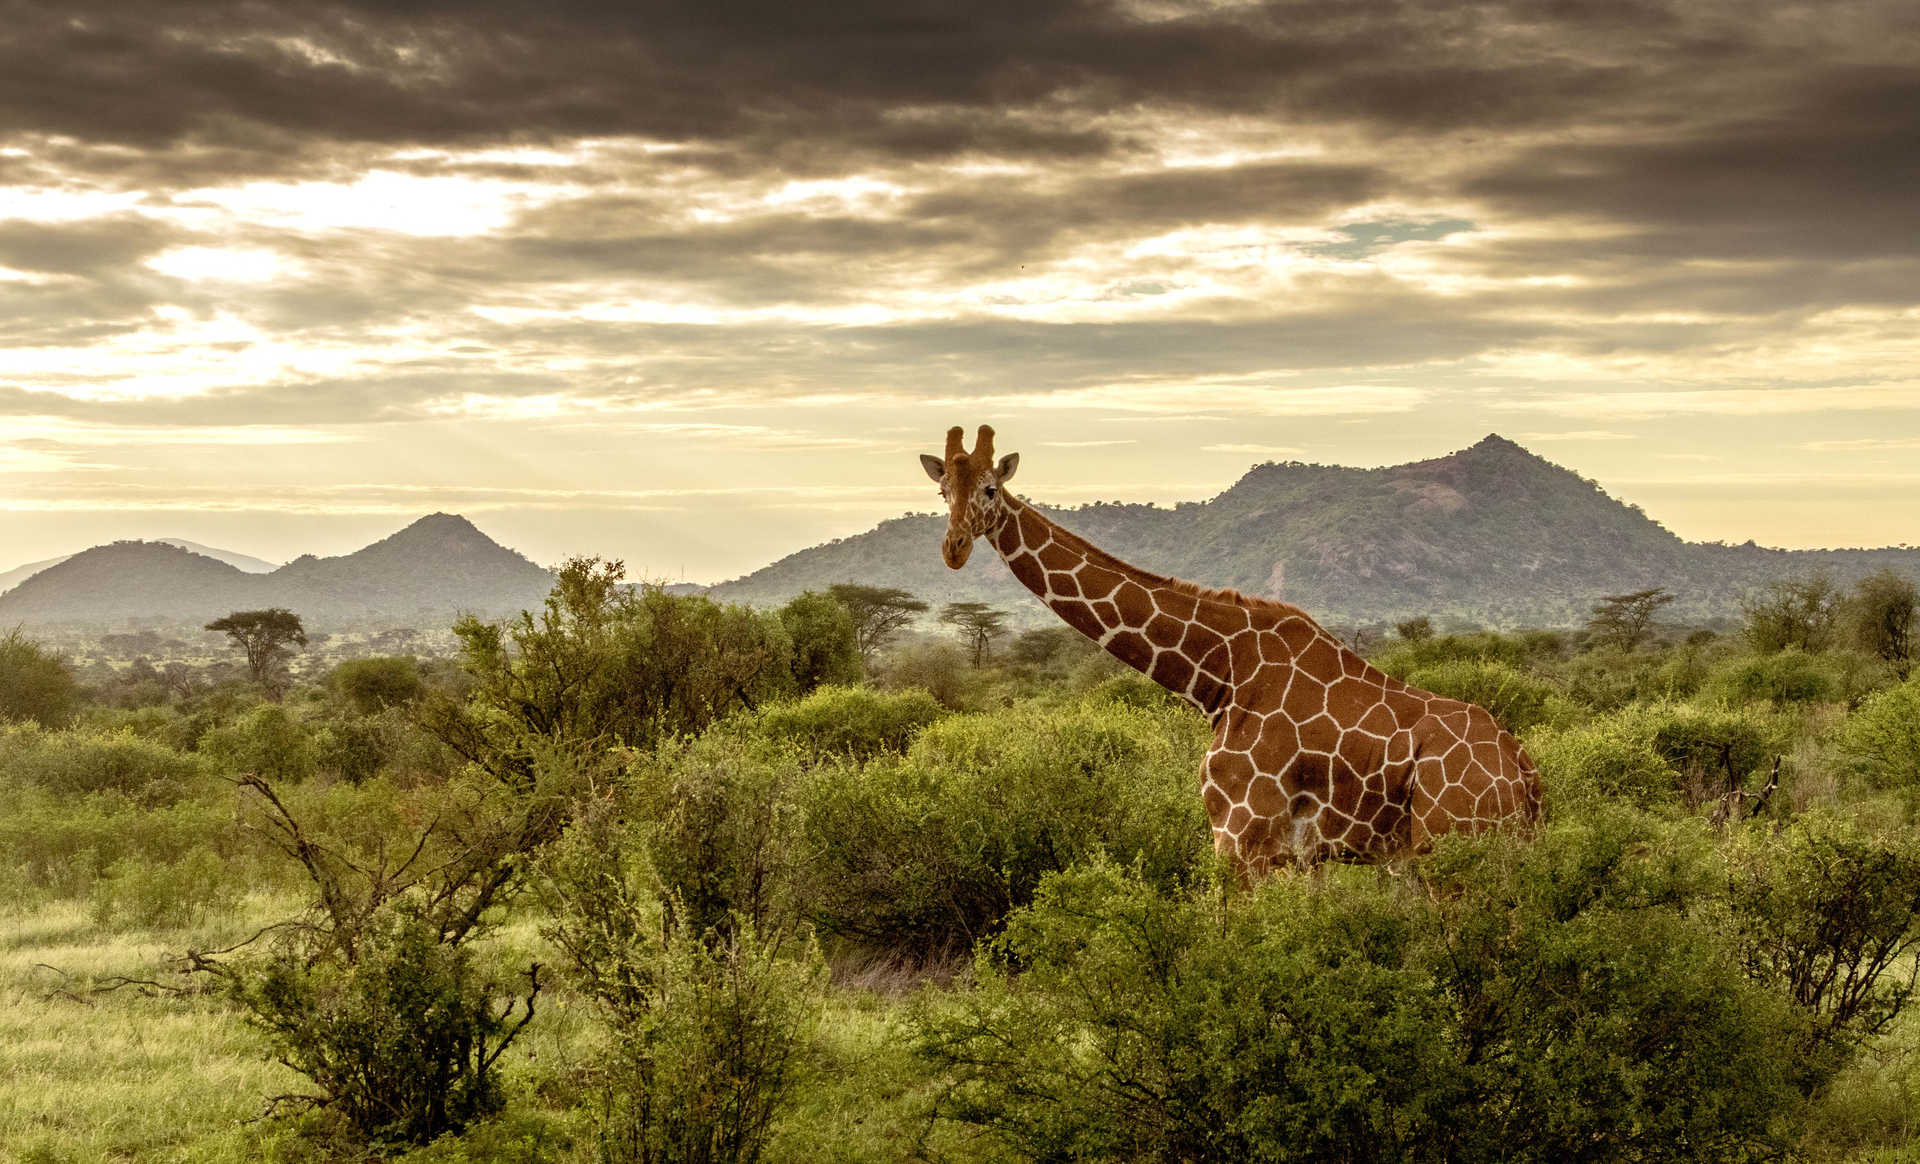 Girafes au Kenya